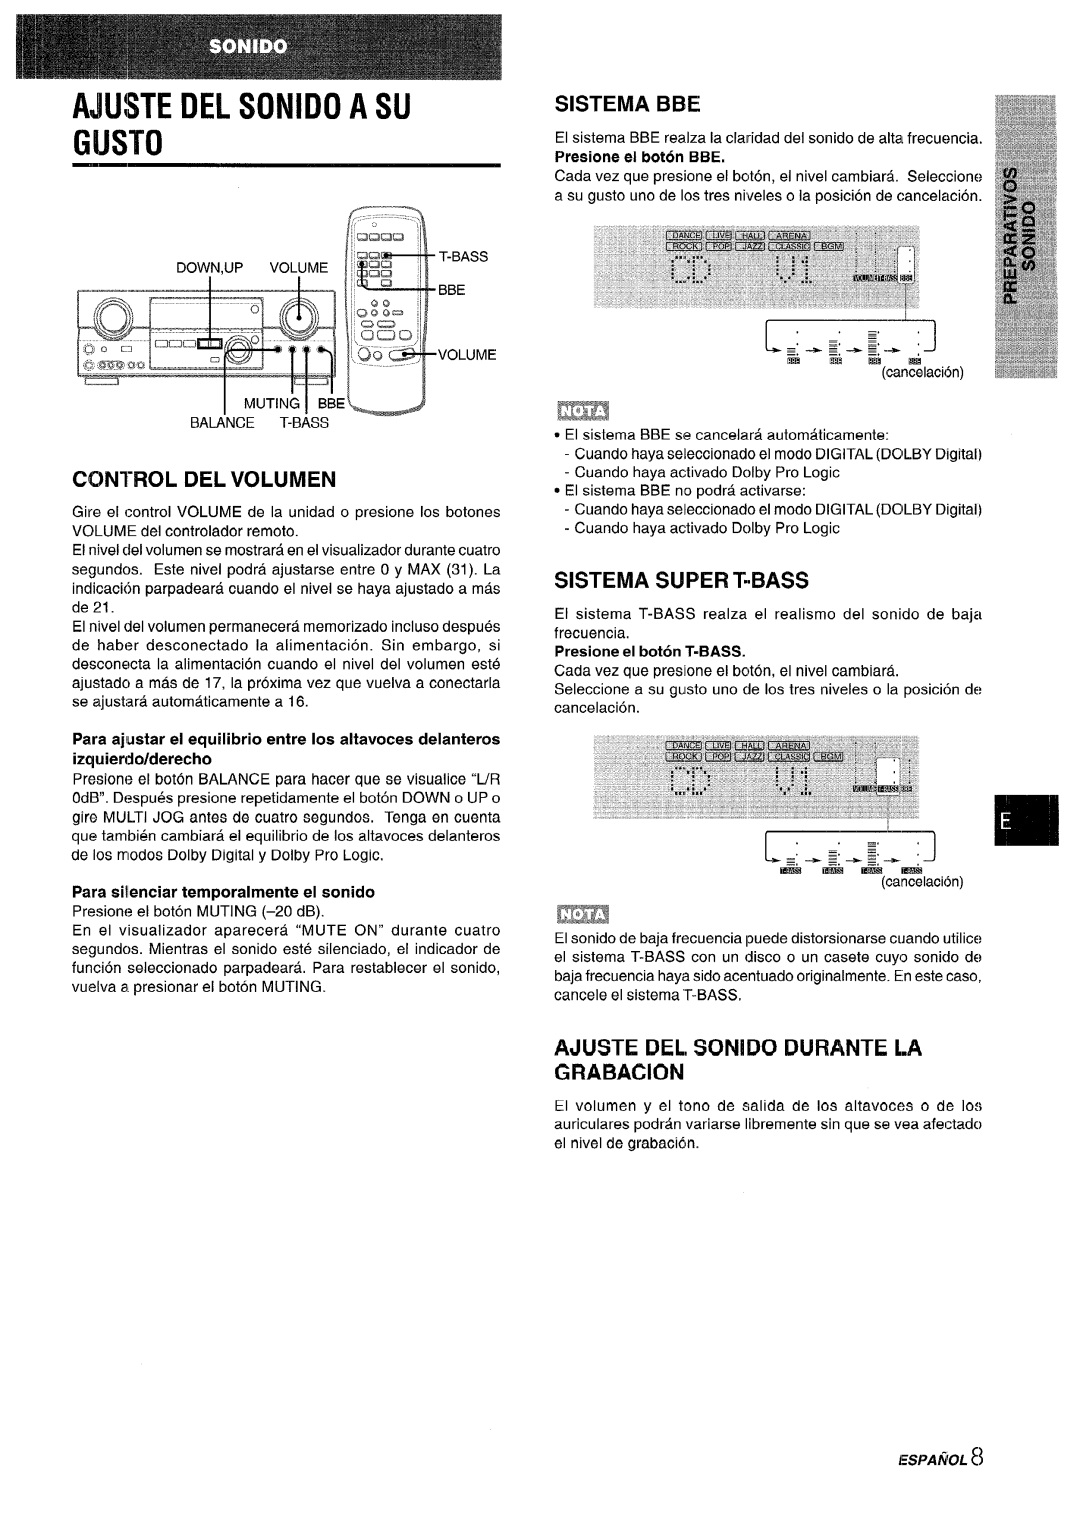 Sony AV-DV75 manual Ajuste Del Sonido A Su Gusto, Control Del Volumen, Sistema Bbe, Sistema Super Tibass 